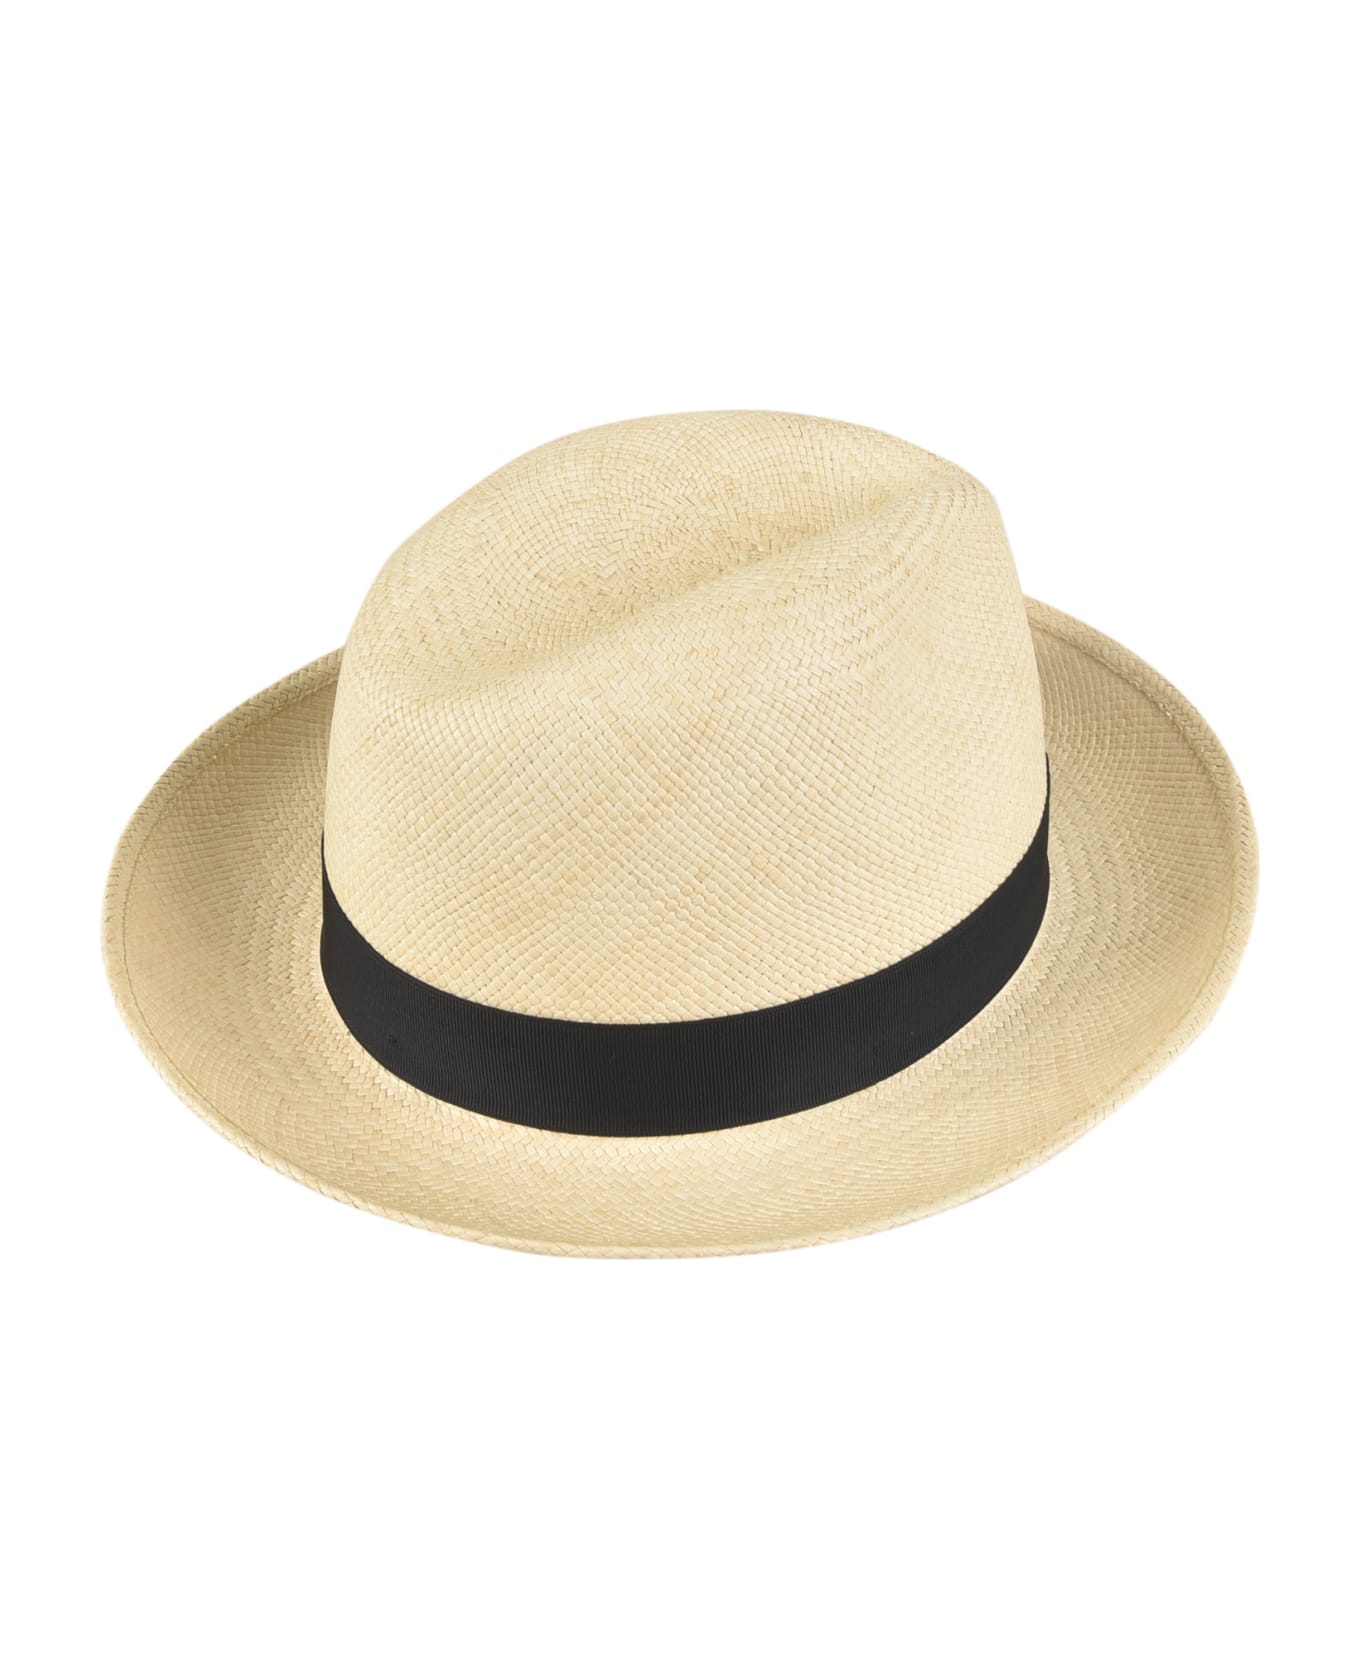 Borsalino Woven Round Hat - Natural 帽子